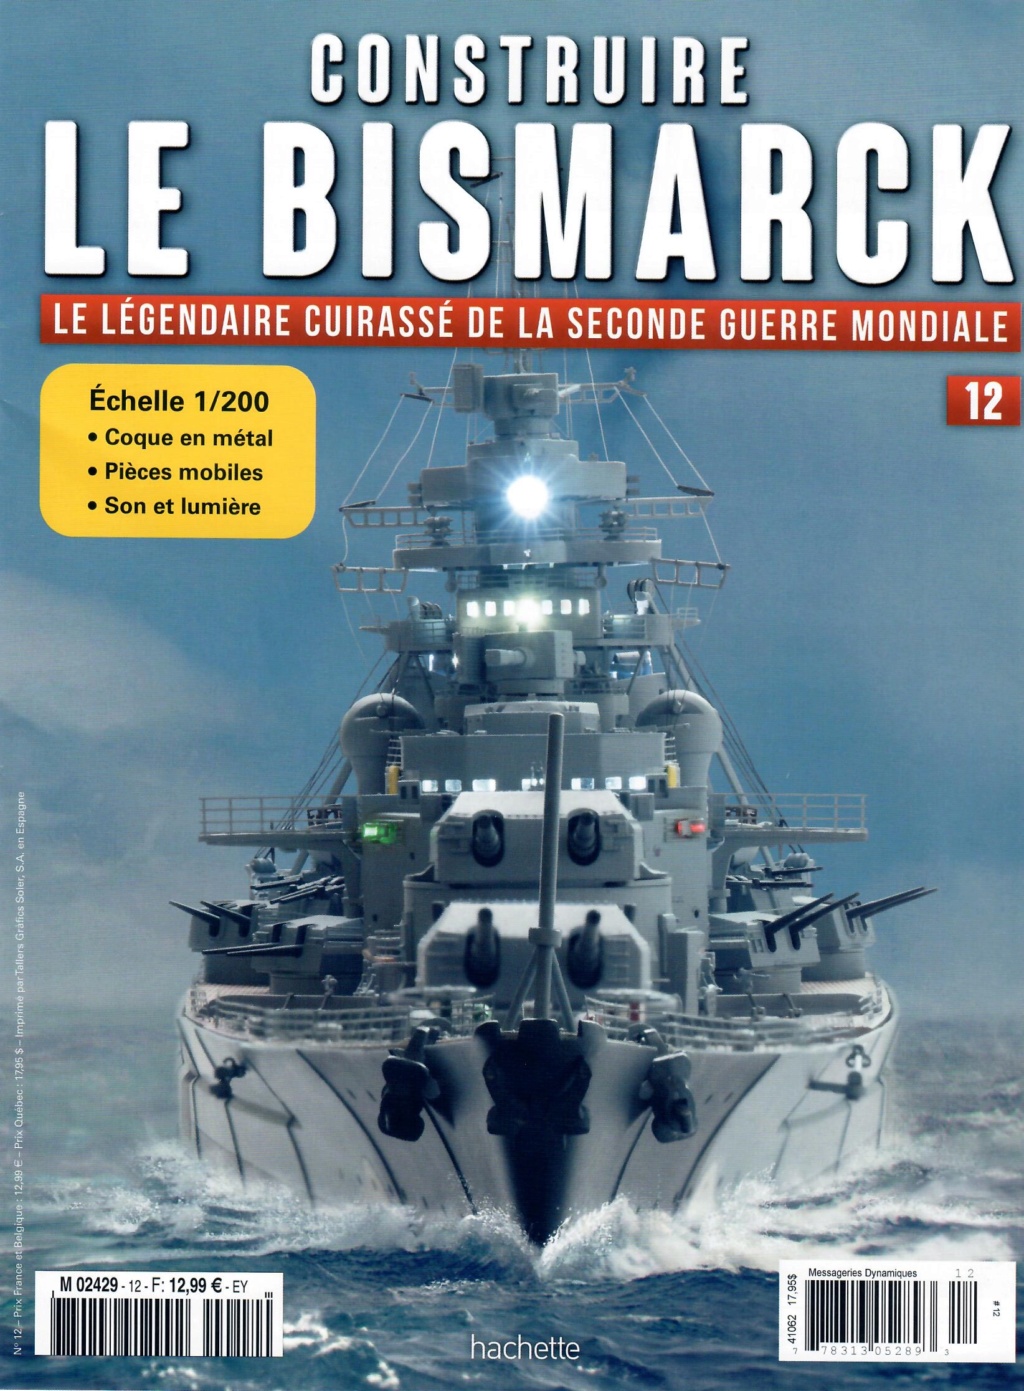 Bismarck - Hachette 1/200 par boks01 - Page 2 Bismar18